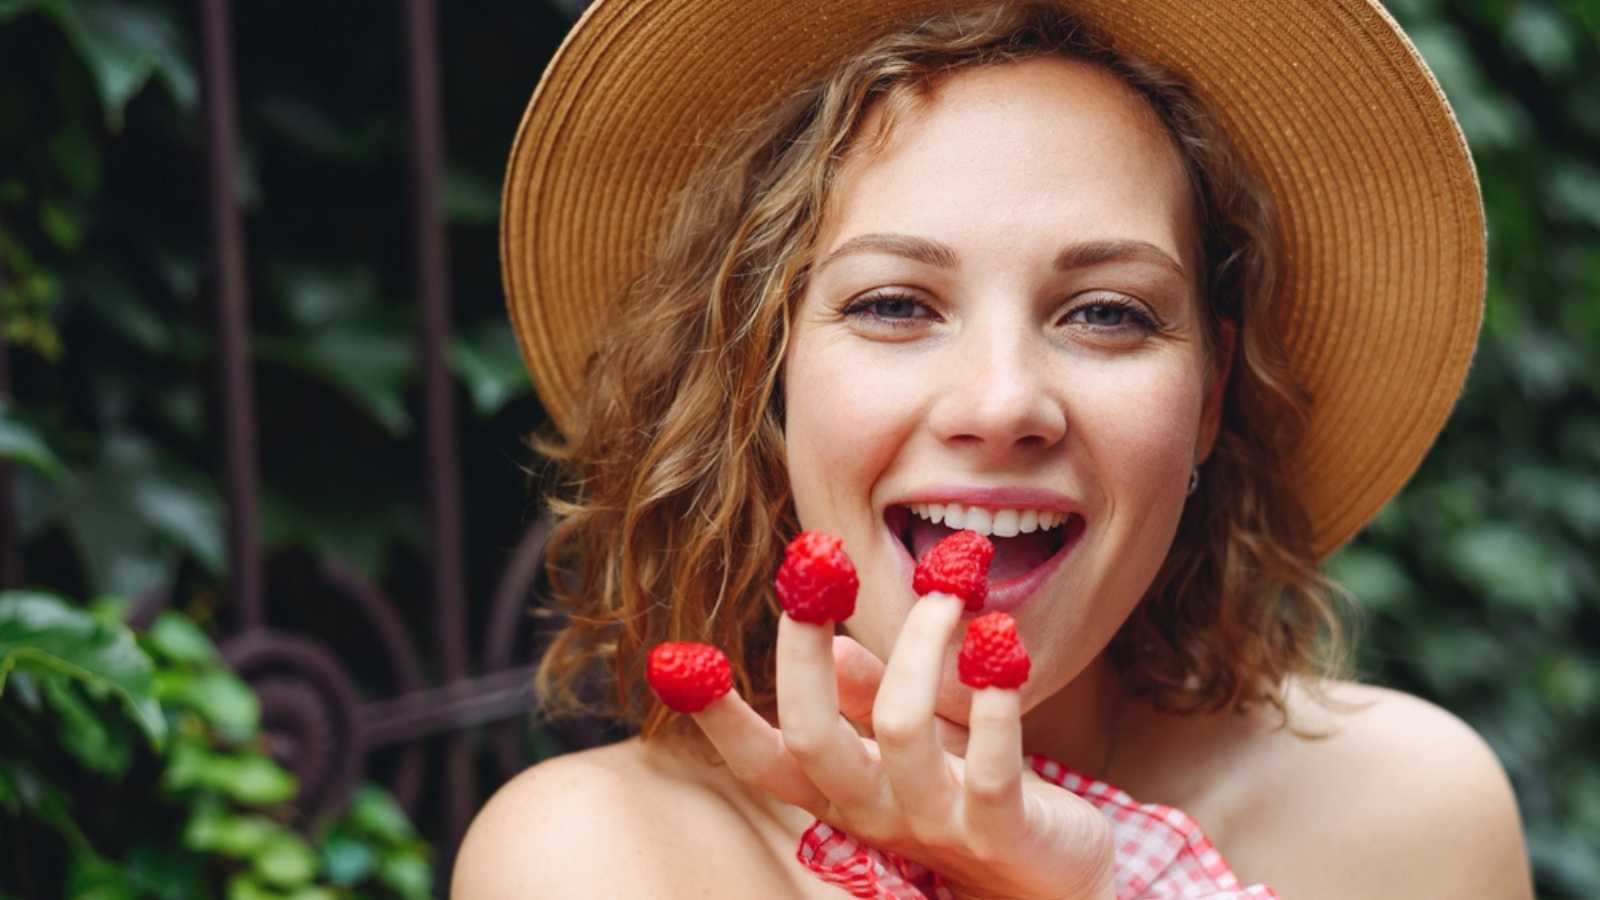 Woman eating raspberry.